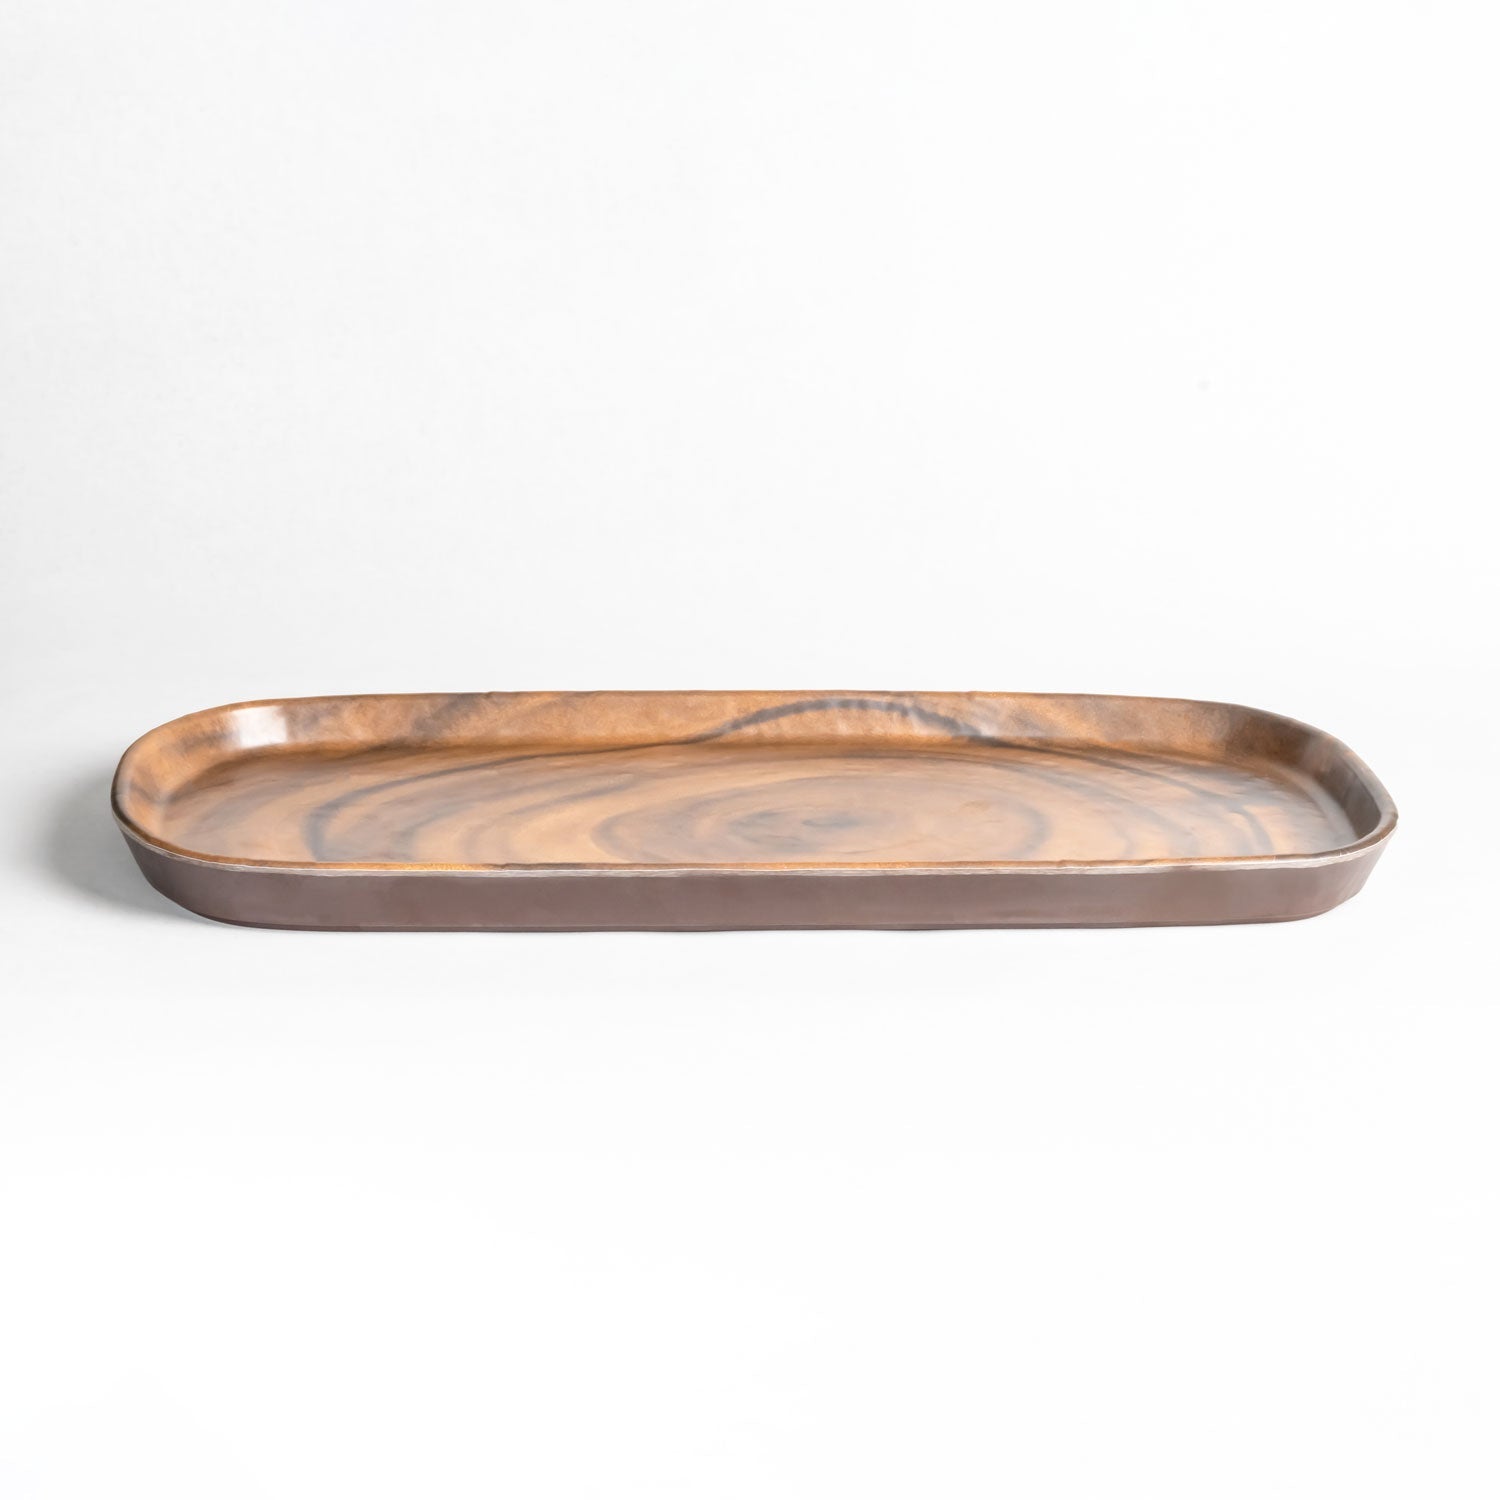 Merritt Designs Sequoia Wood 14.5 inch Melamine Appetizer Tray